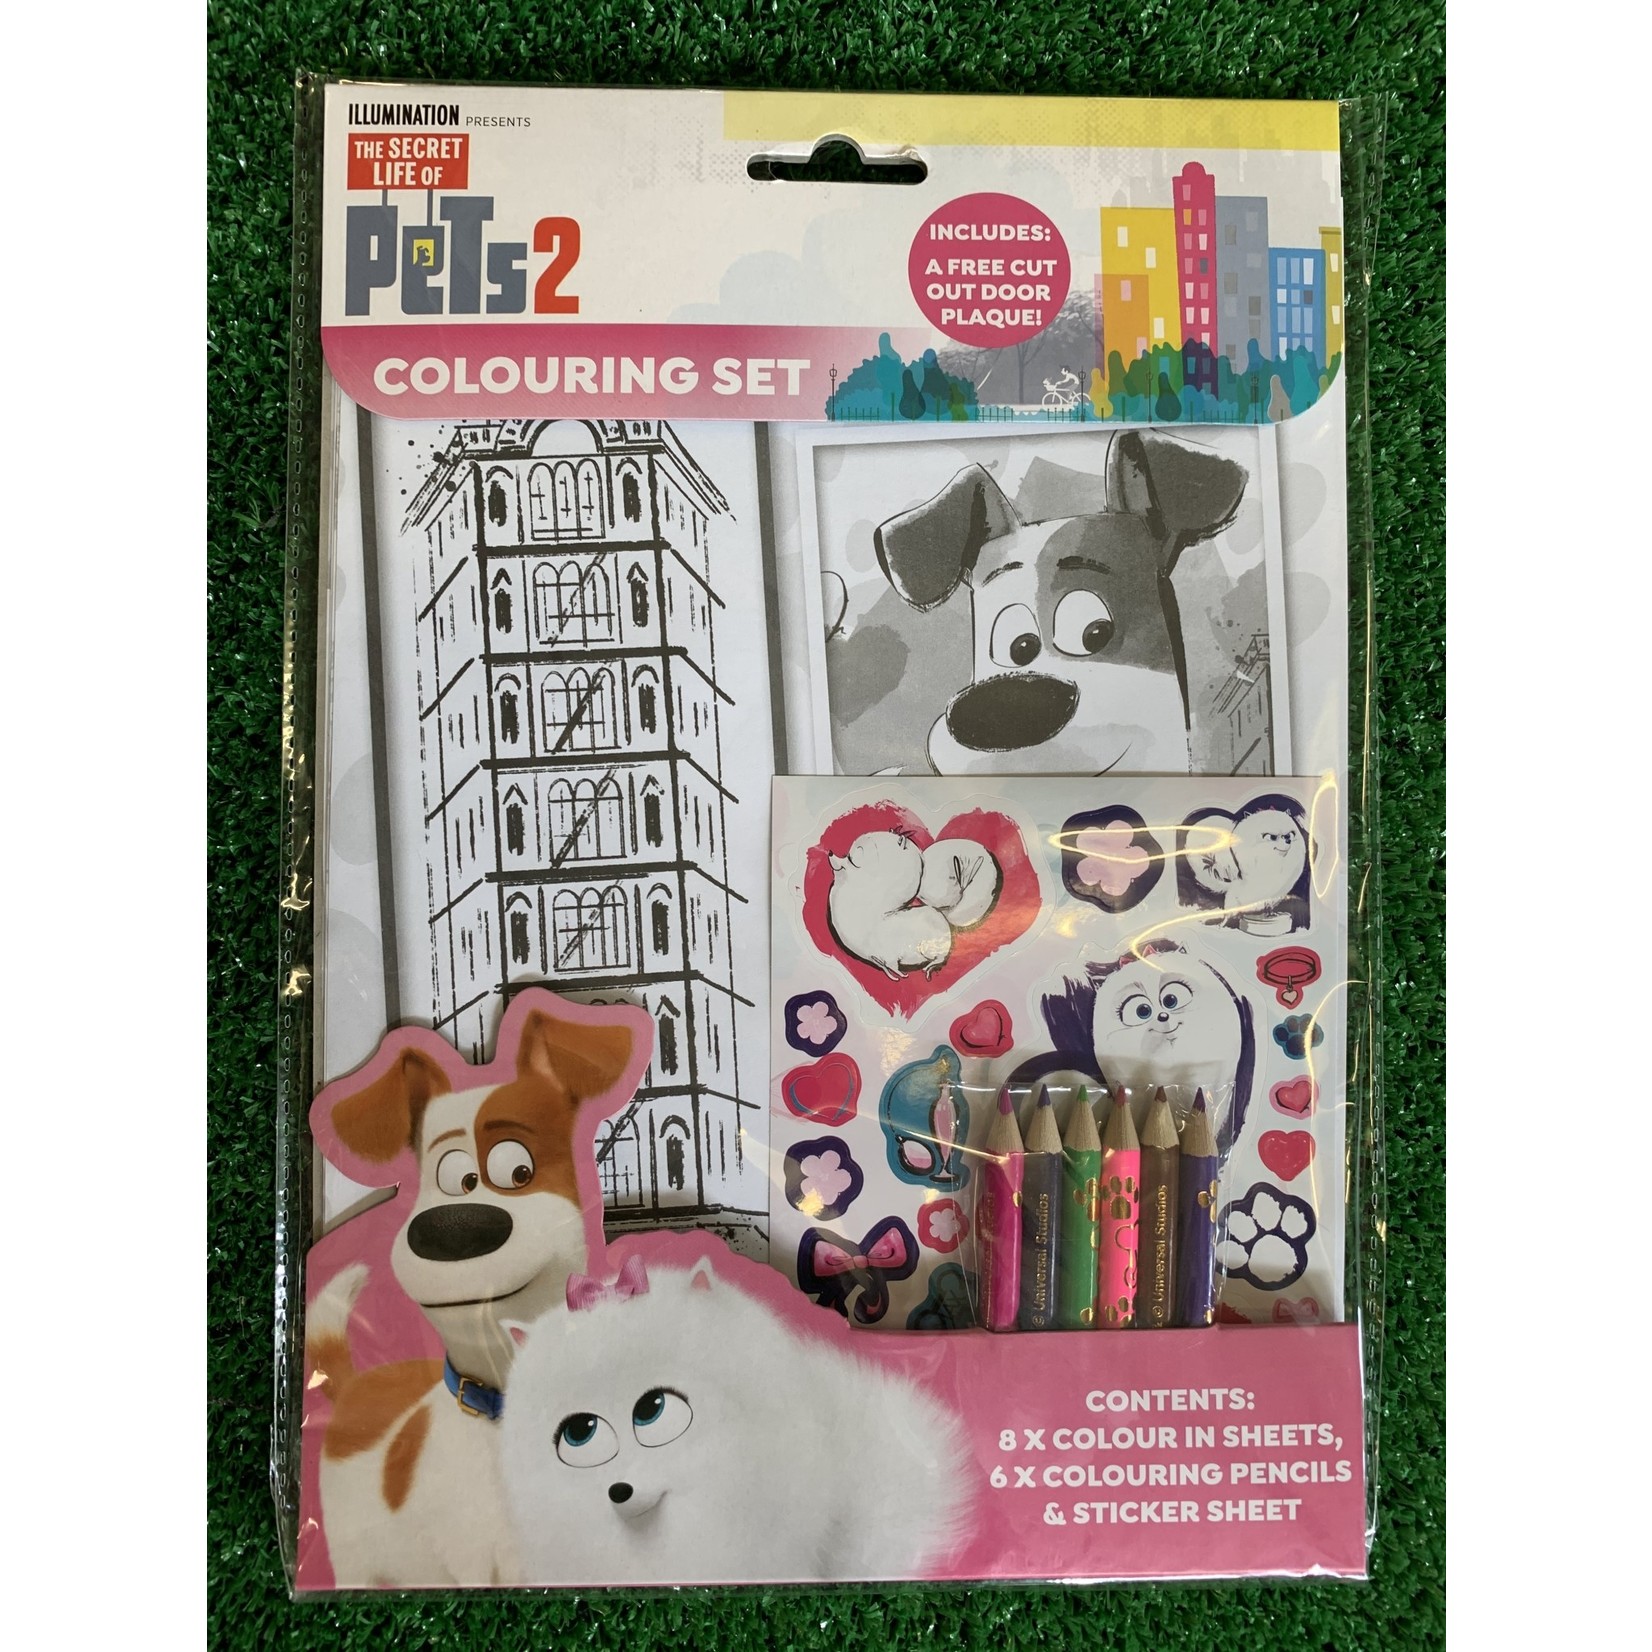 Secret Life of Pets 2 Colouring Set